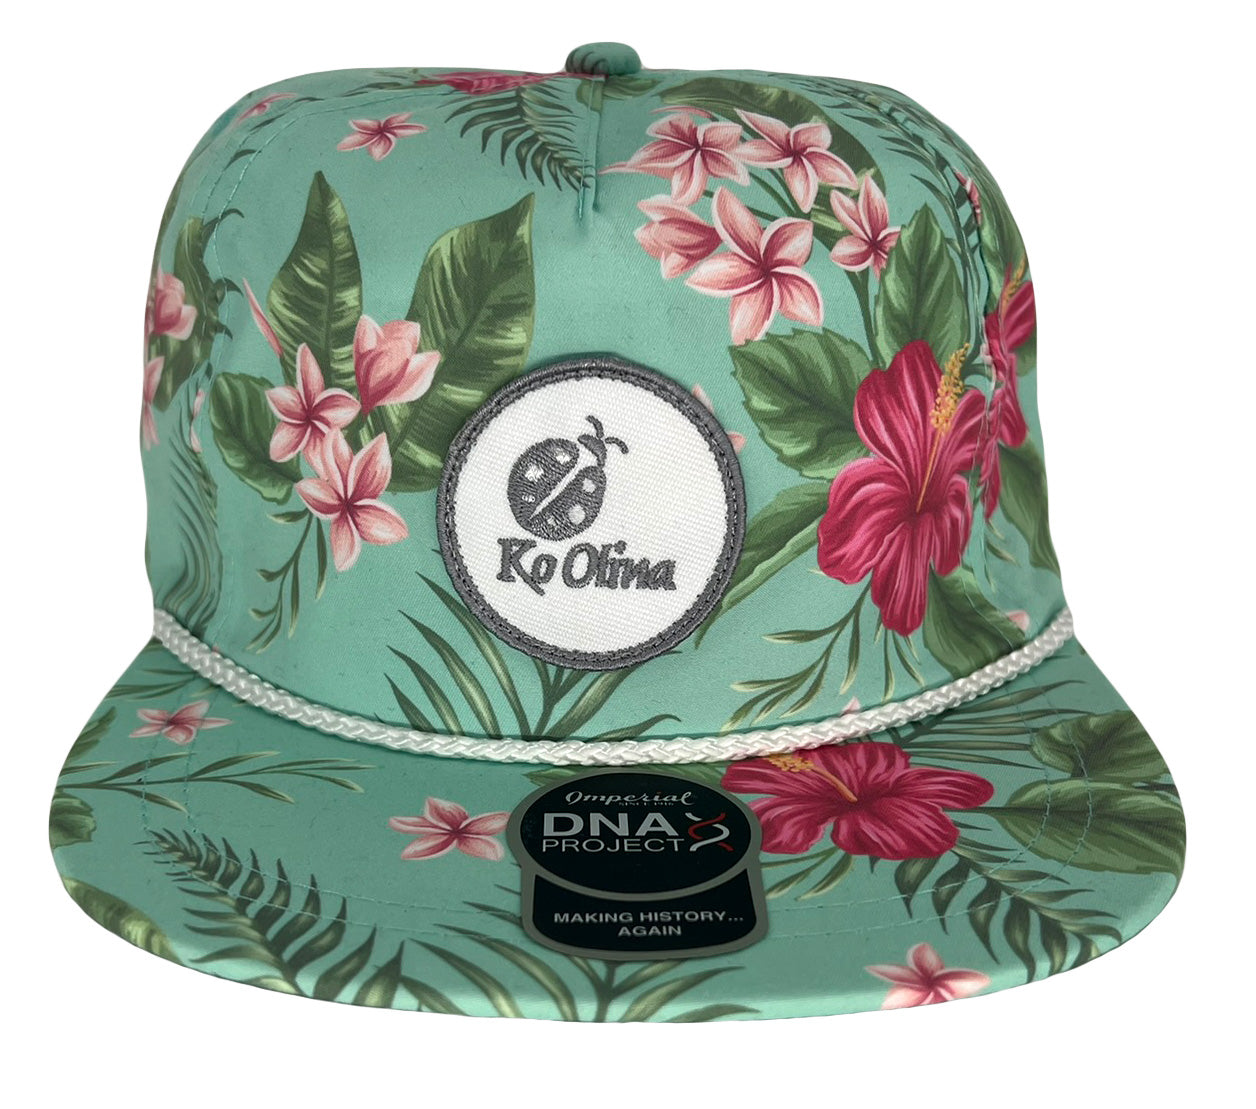 Ko Olina Aloha Rope Hat